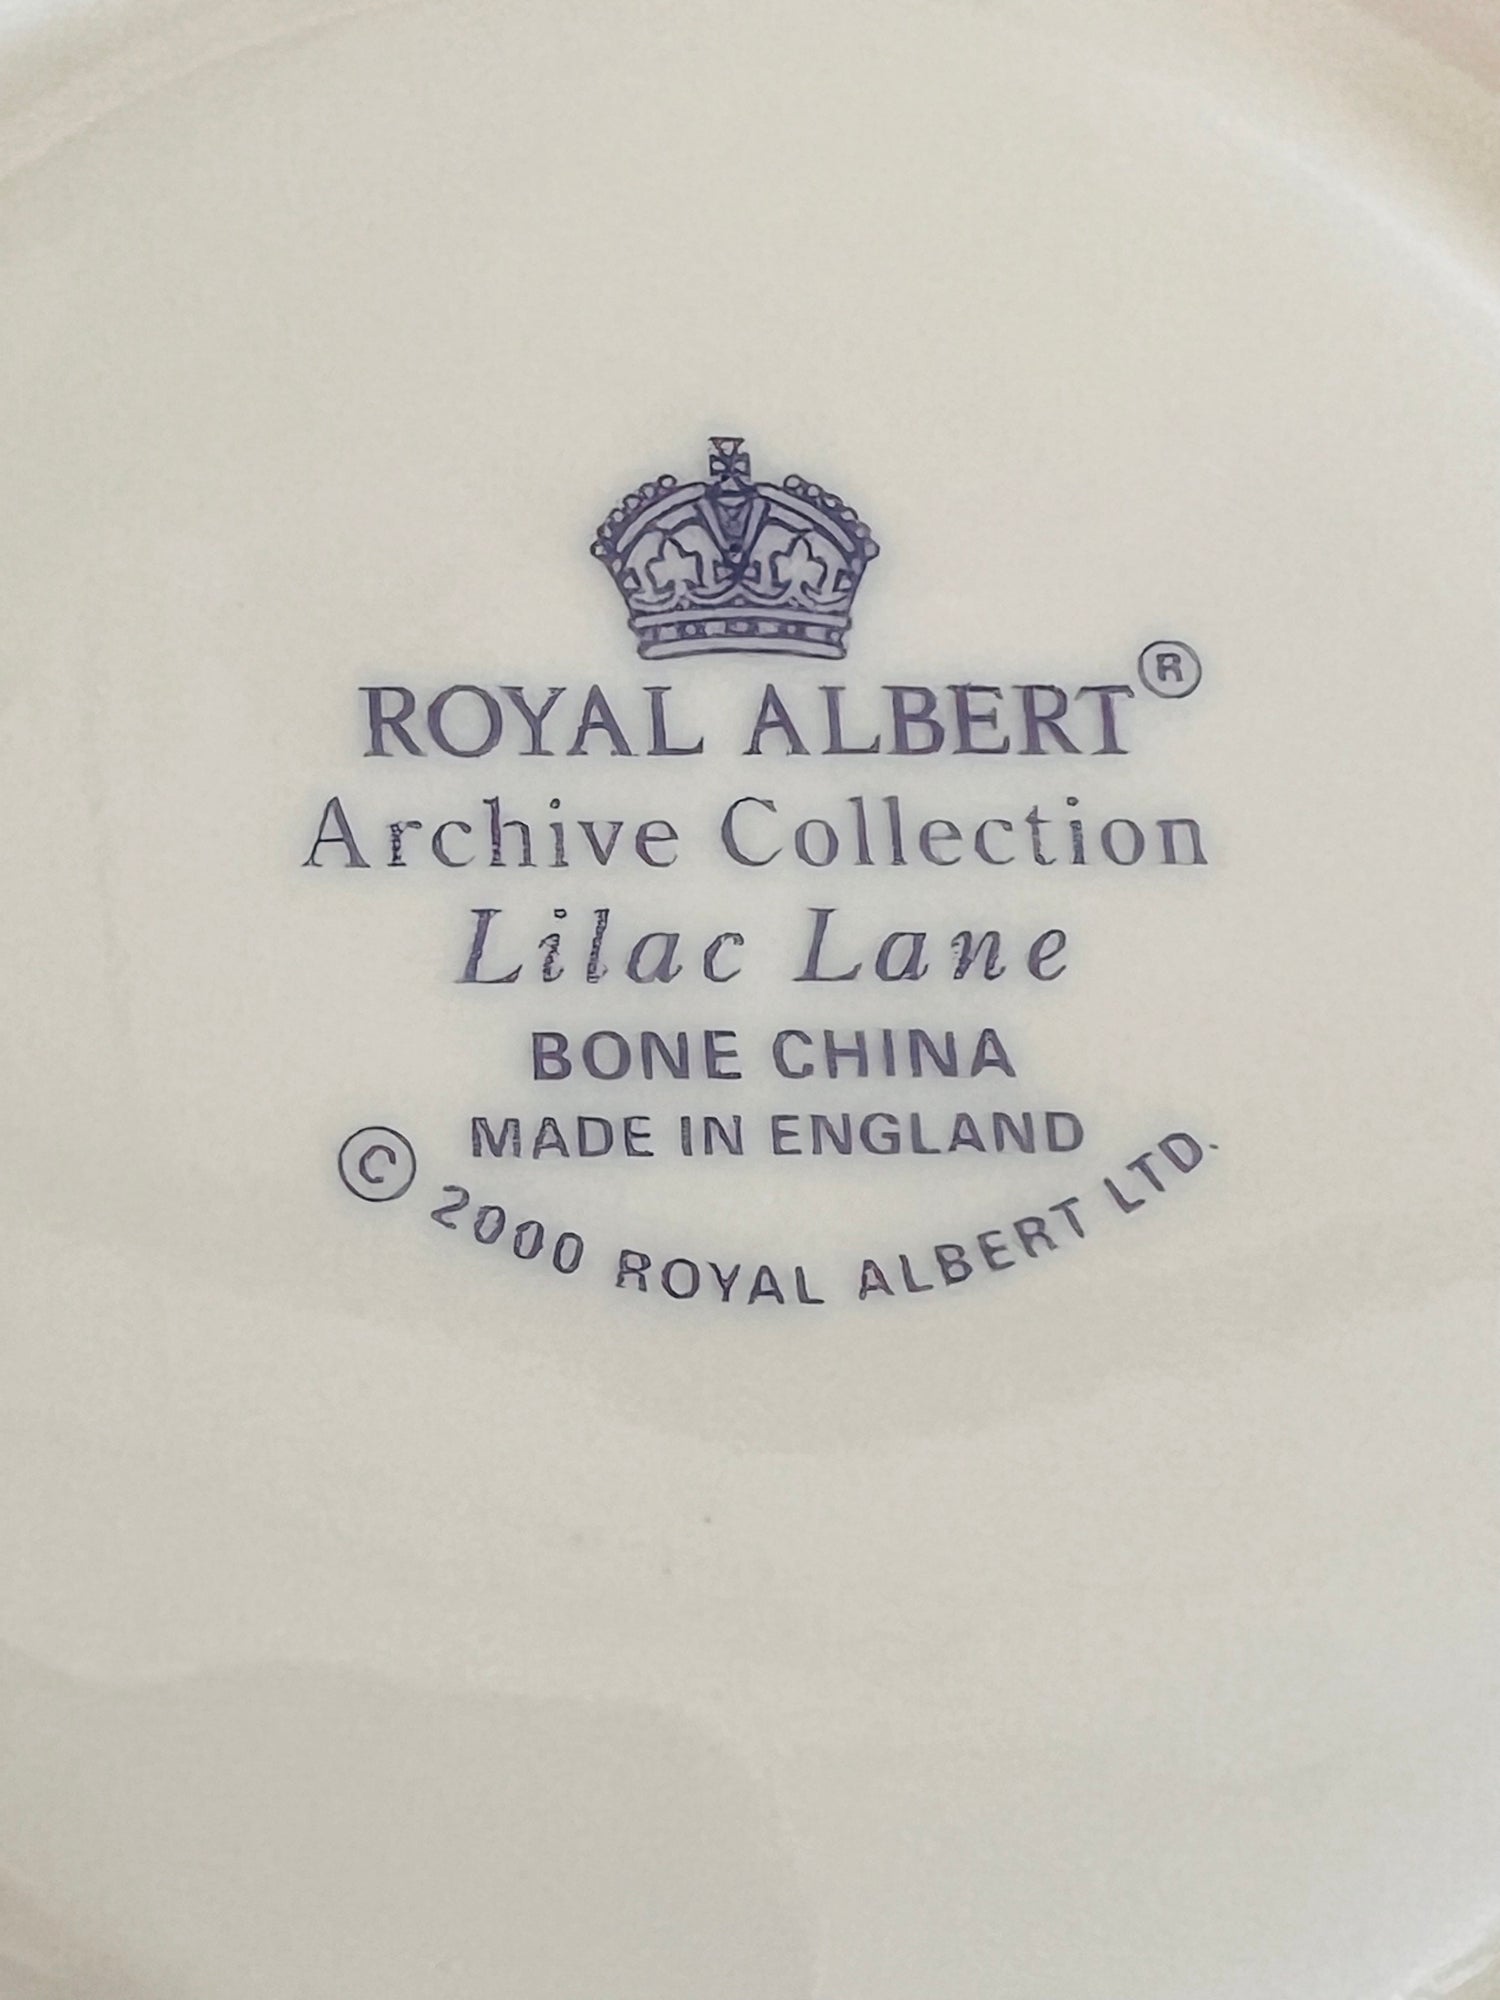 Royal Albert Archive Collection Lilac Lane